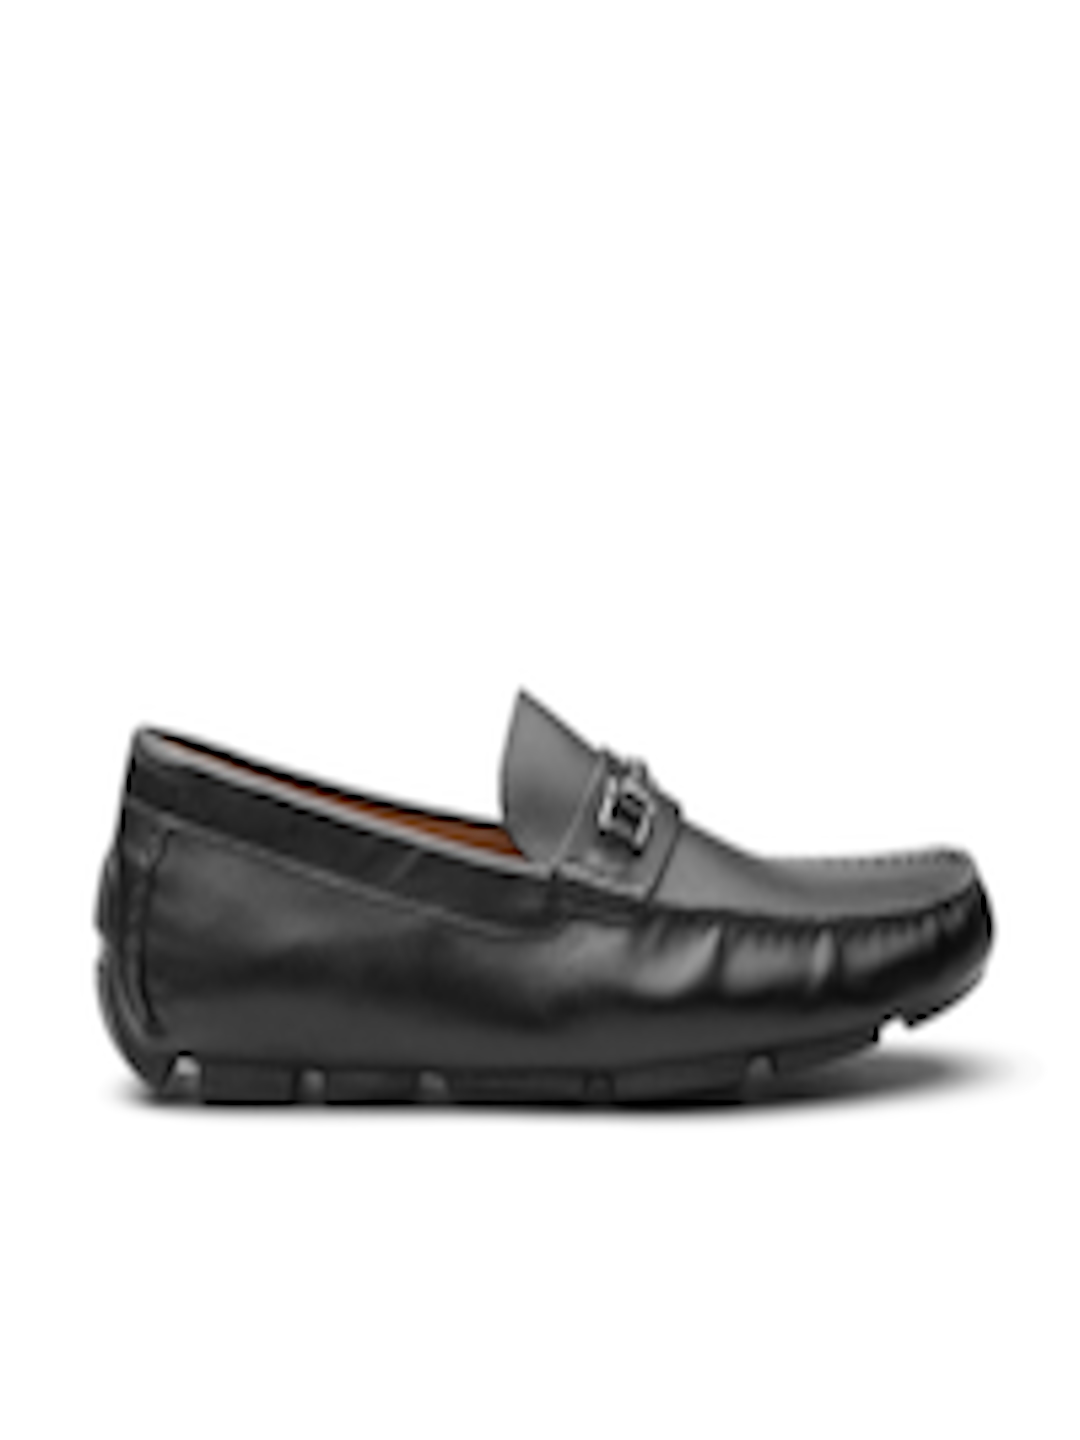 Buy ALDO Men Black Leather Driving Shoes - Casual Shoes for Men 1749279